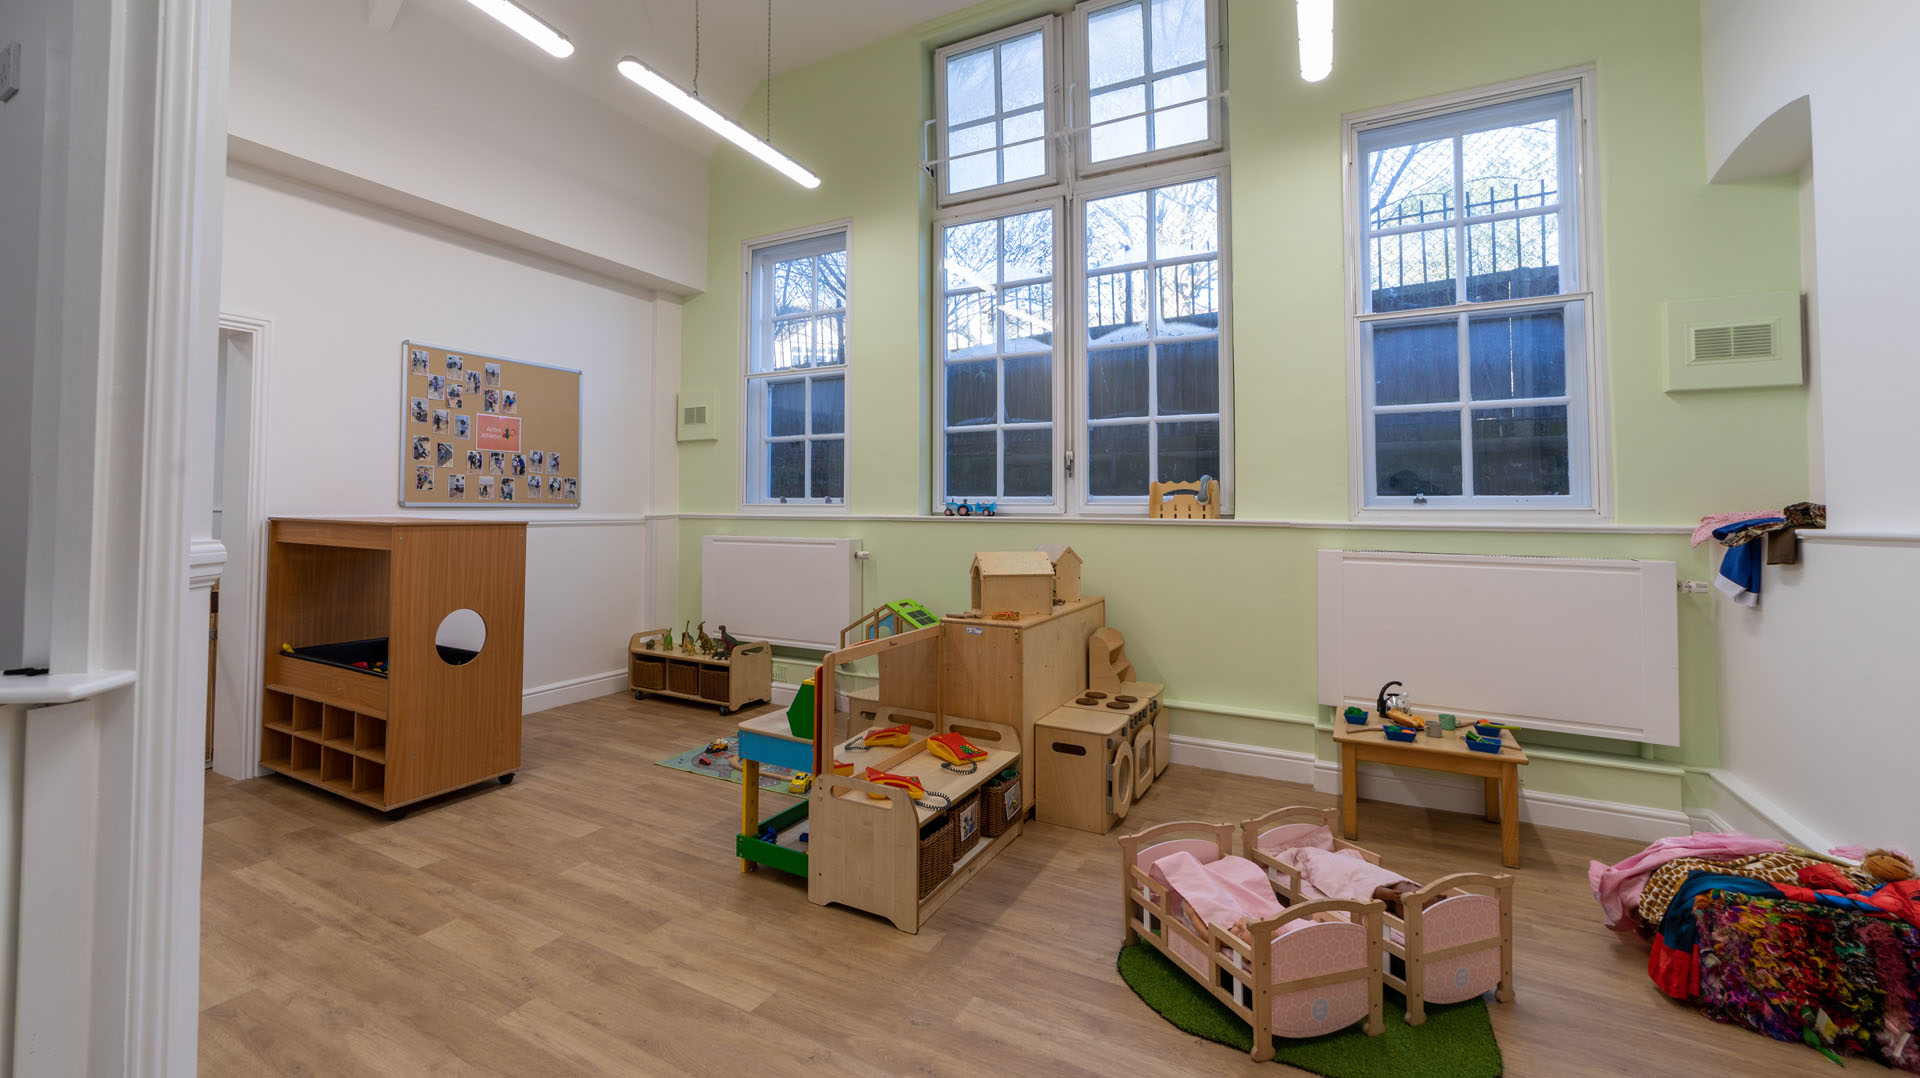 Coulsdon Day Nursery and Preschool nursery room